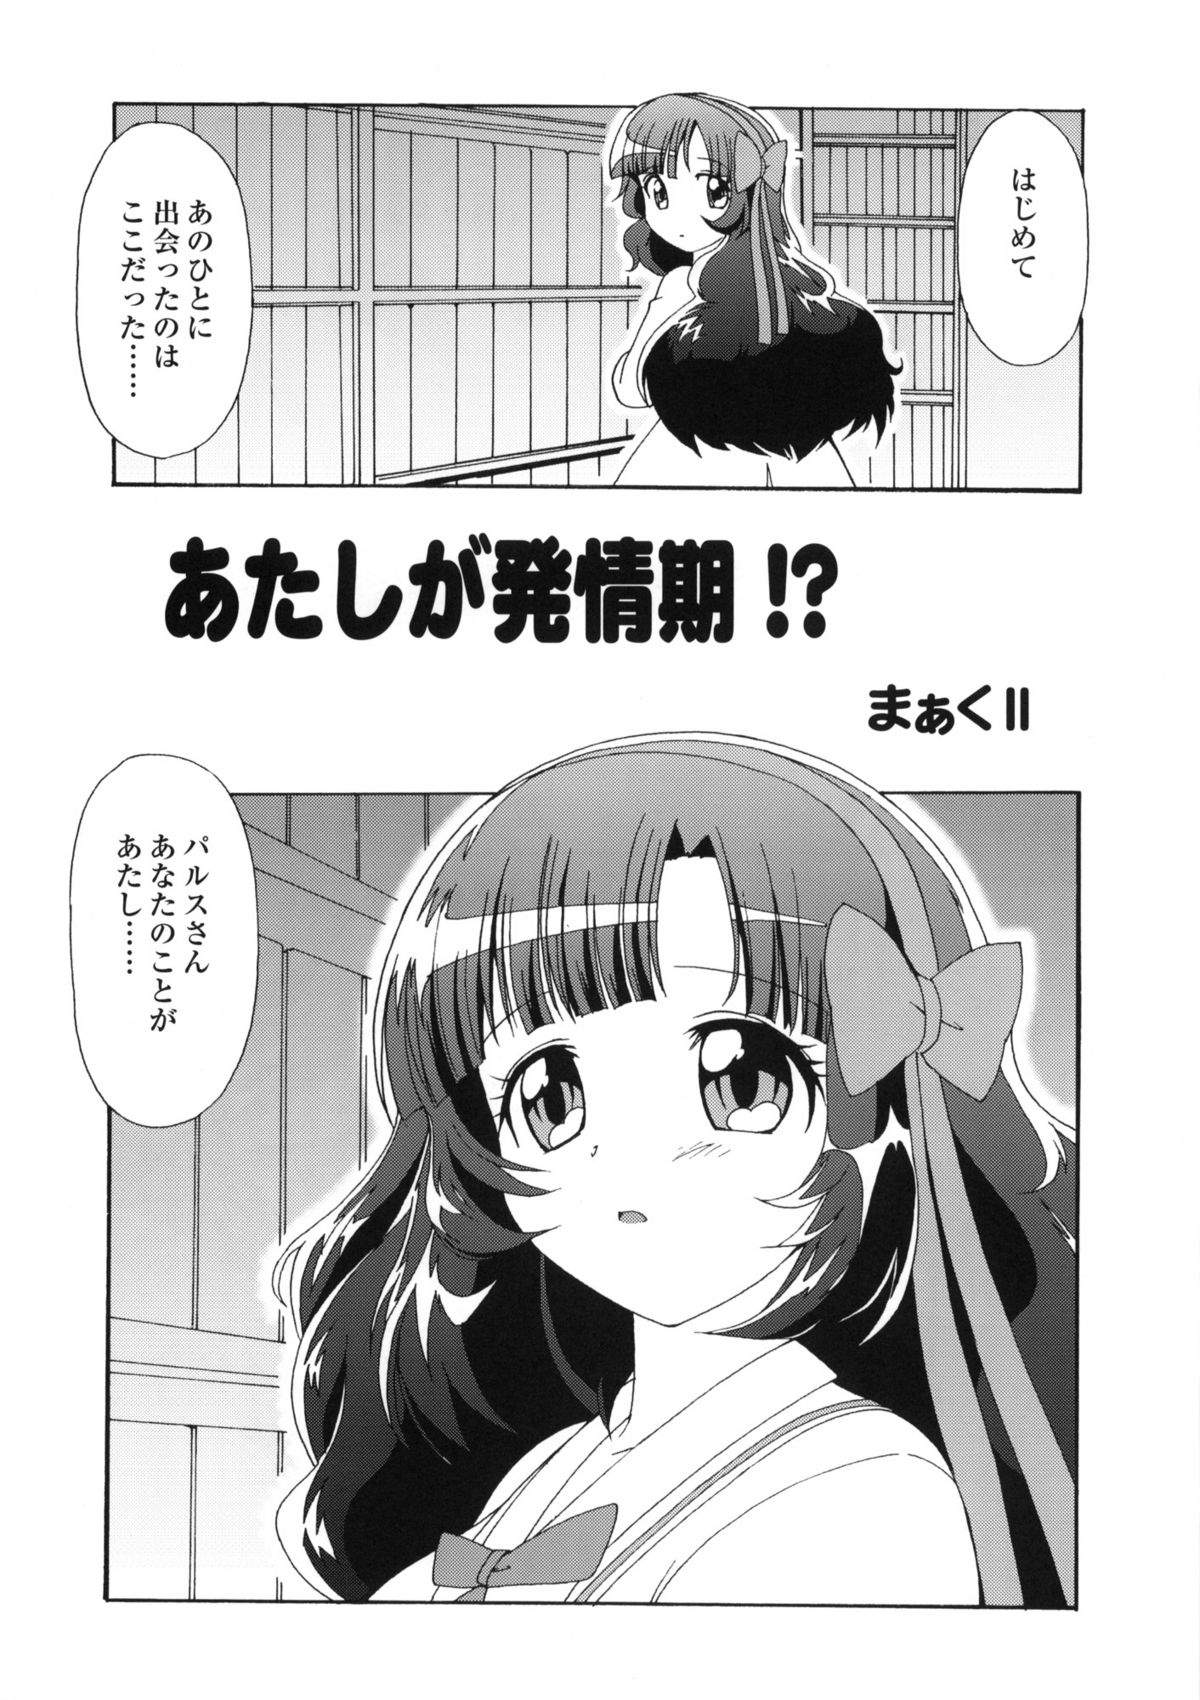 (COMIC1☆4) [MunchenGraph] Inu Jump (Anyamaru Tantei Kiruminzuu) (COMIC1☆4) [MunchenGraph] Inu Jump (あにゃまる探偵 キルミンずぅ)